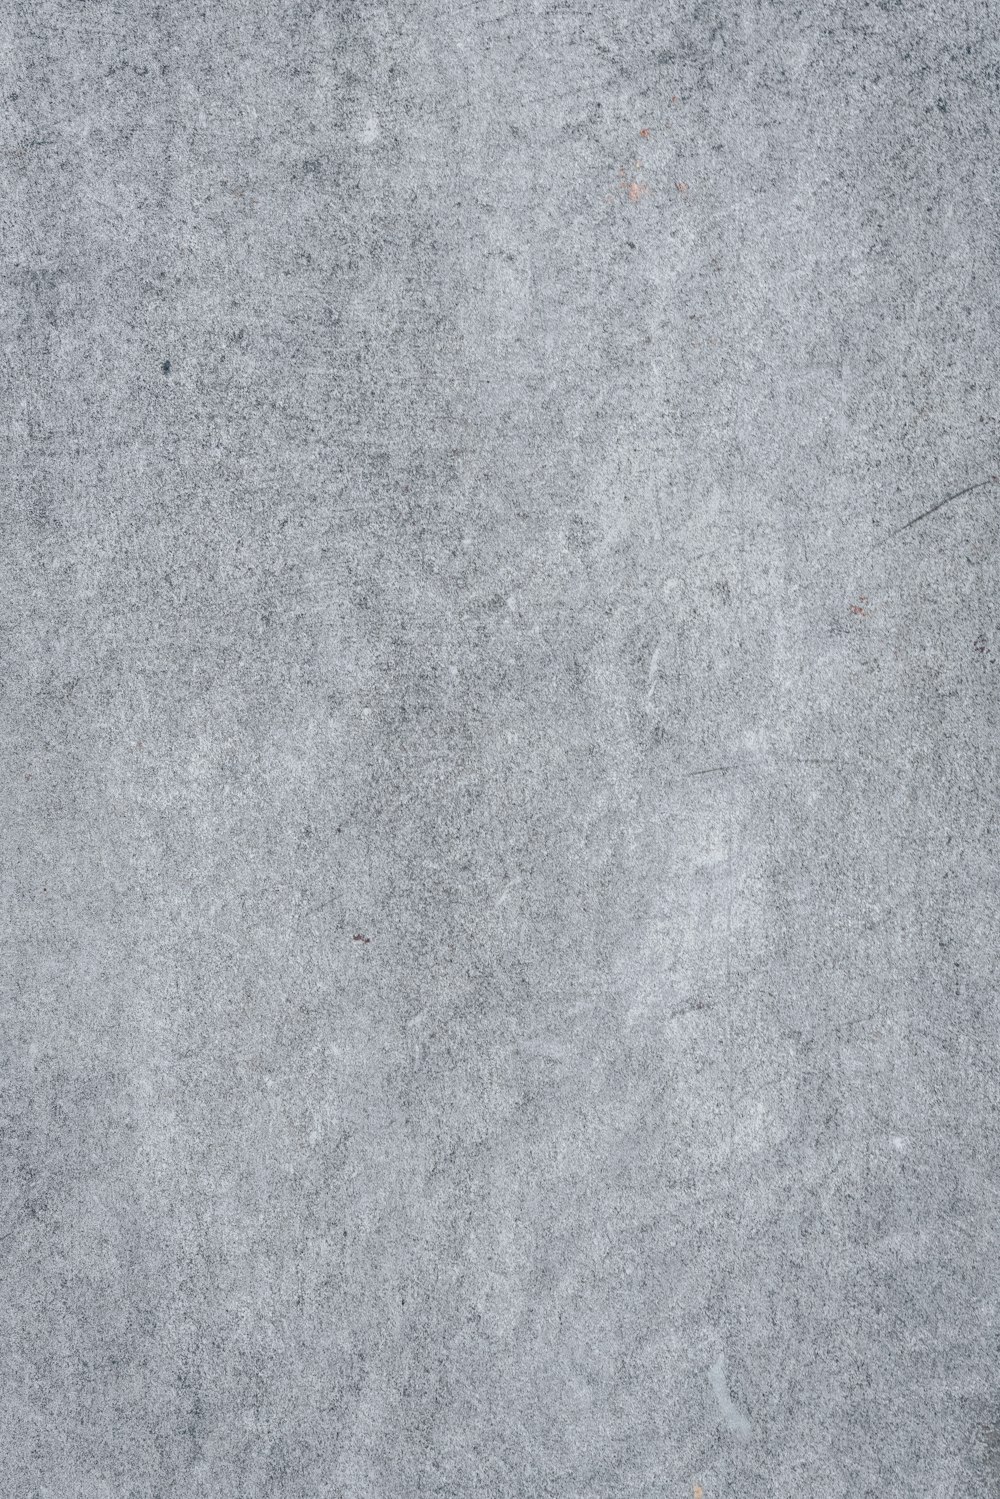 Stone Wallpapers: Free HD Download [500+ HQ] | Unsplash